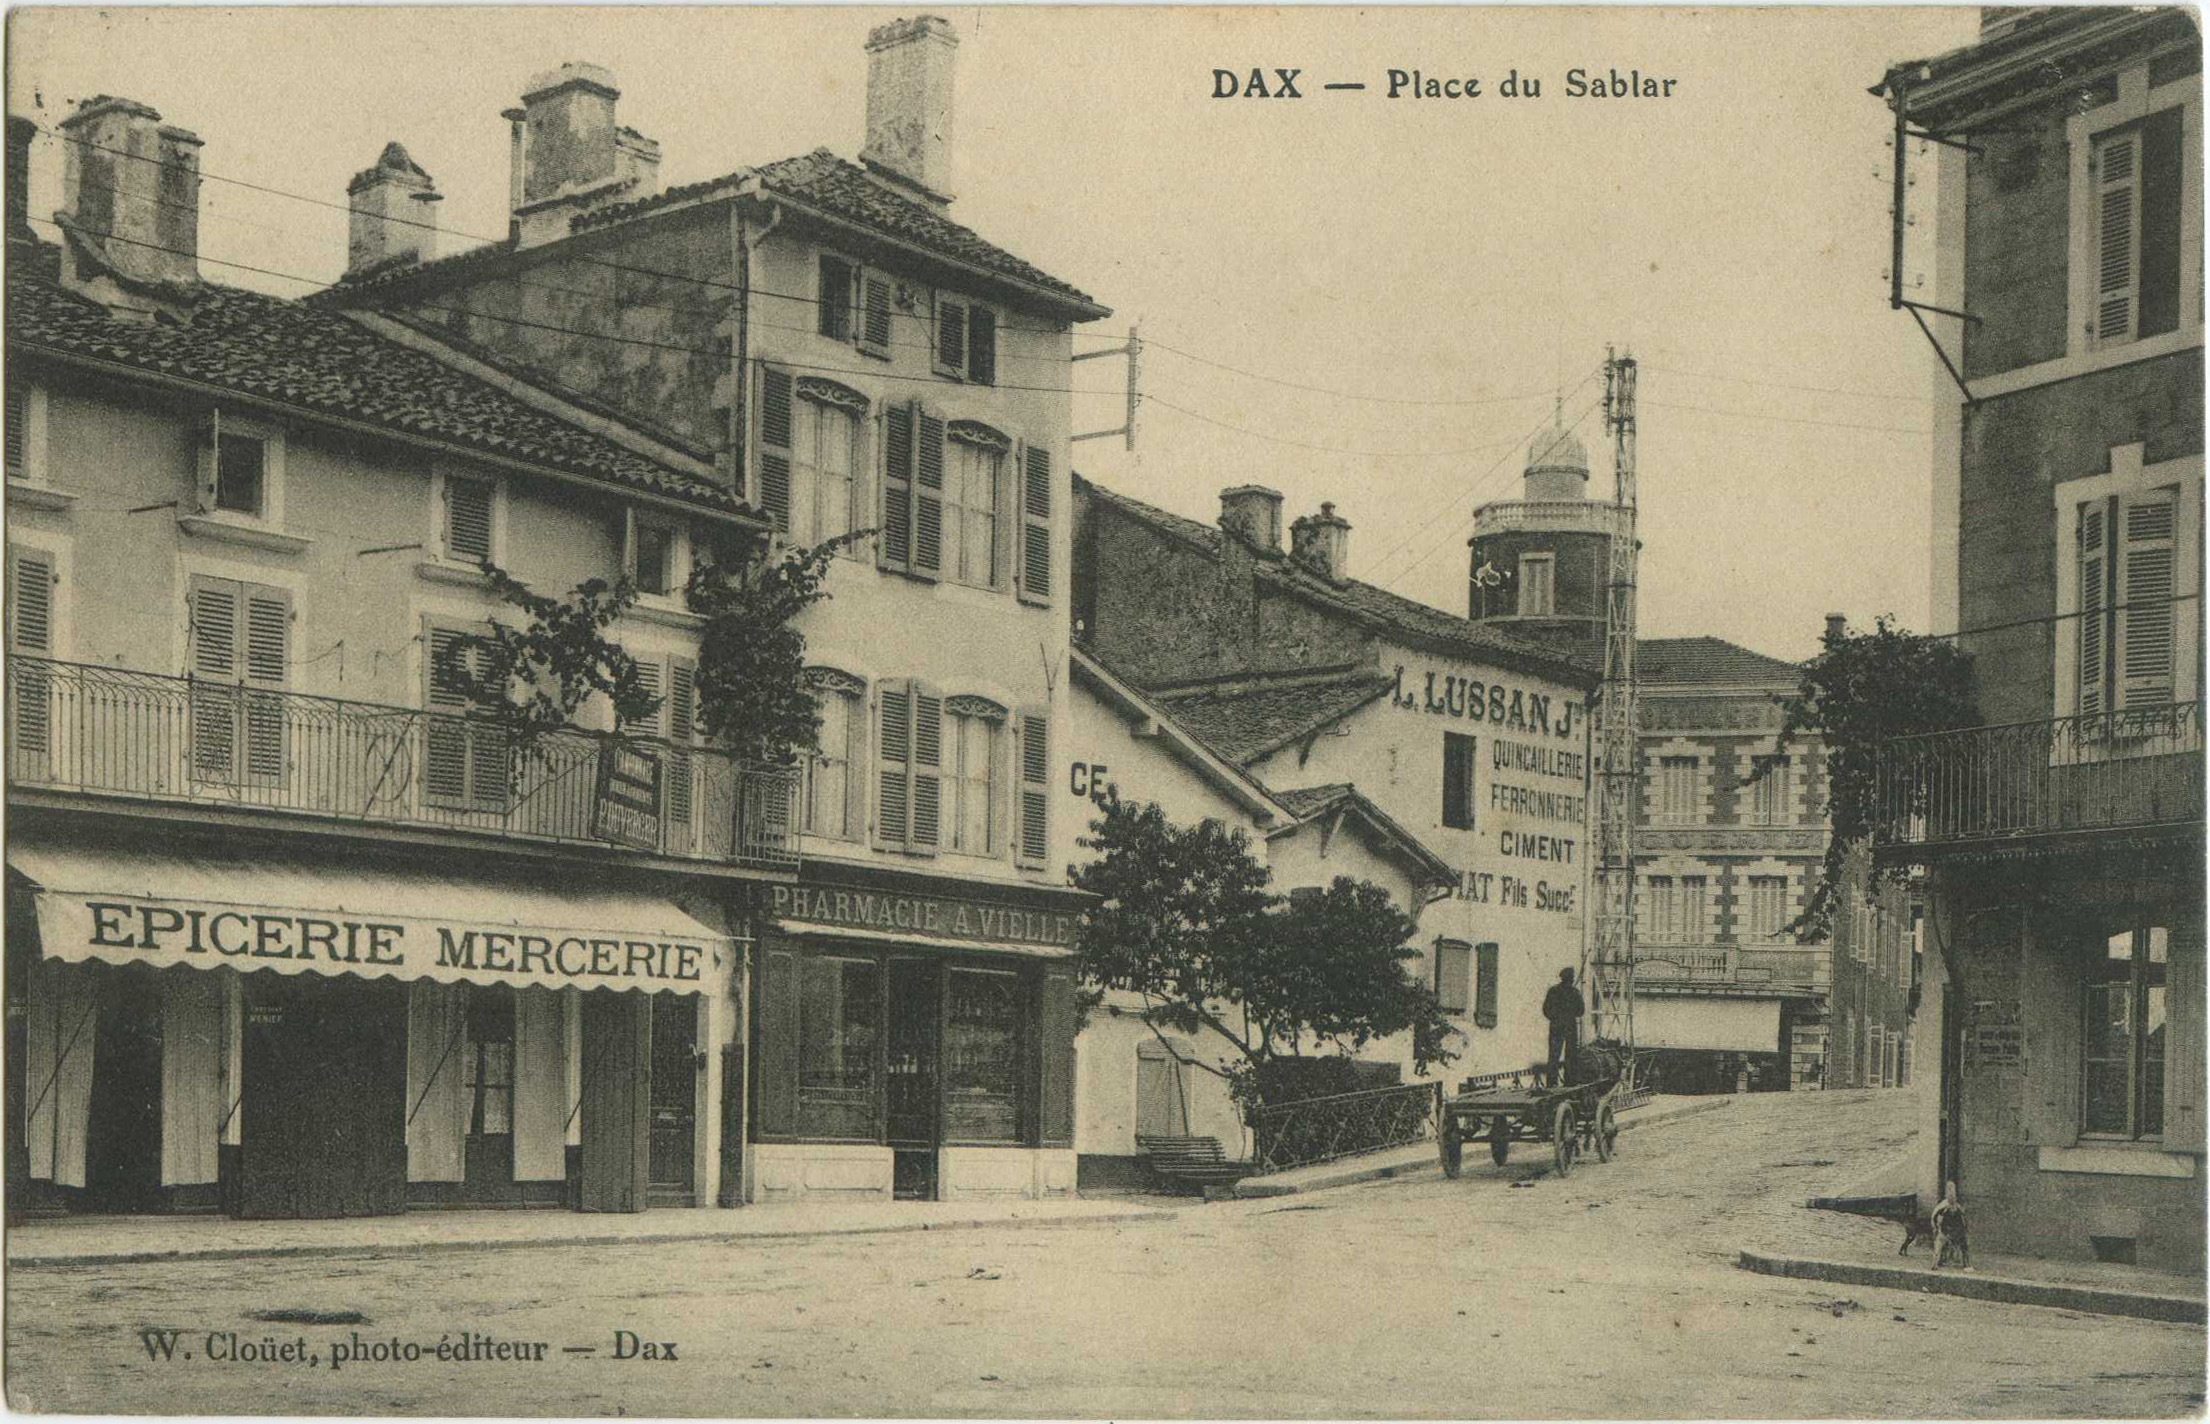 Dax - Place du Sablar